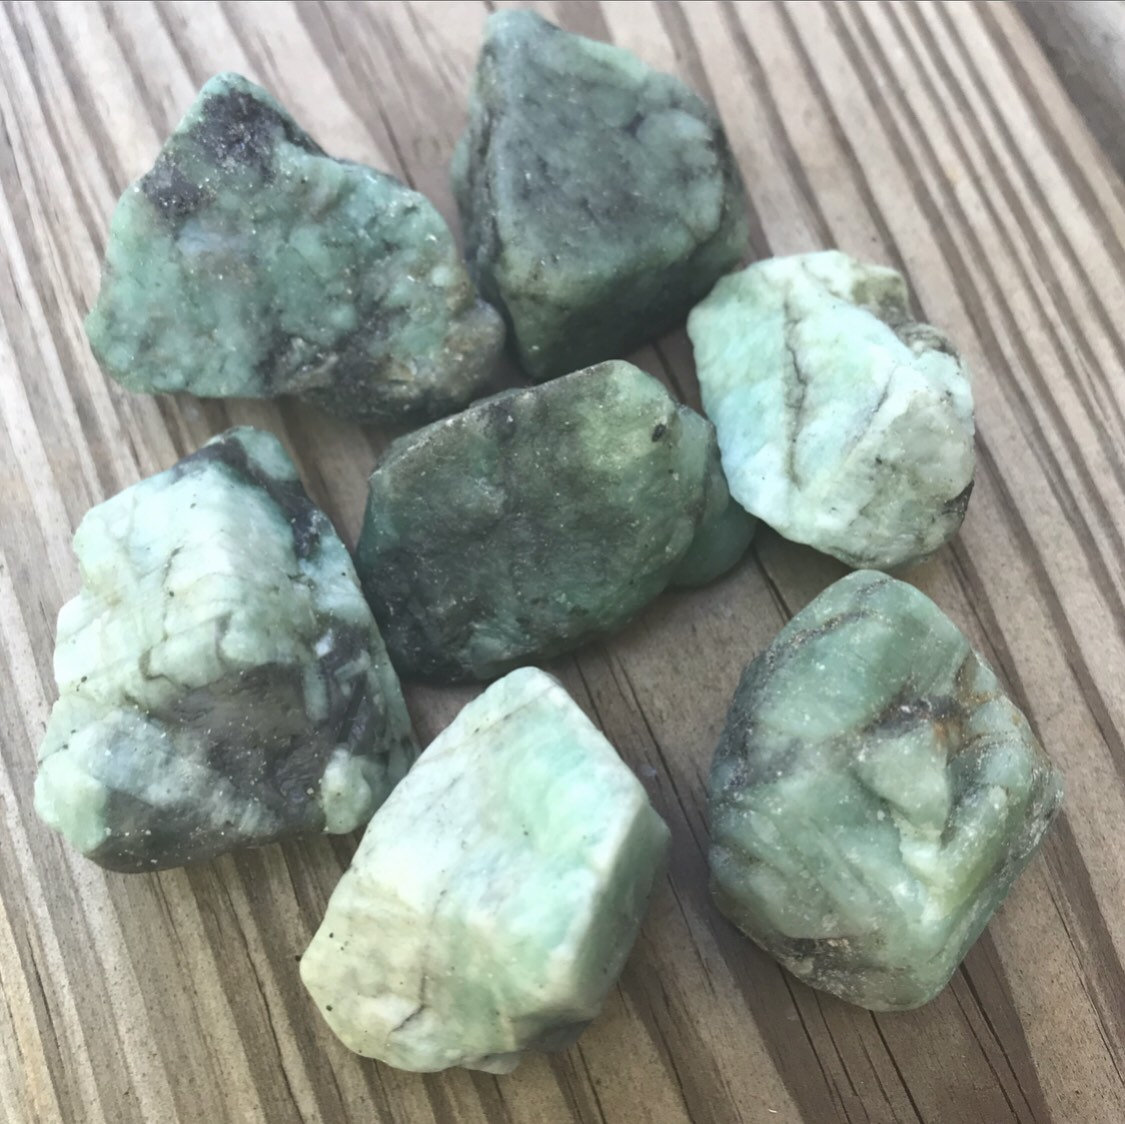 Emerald Crystals